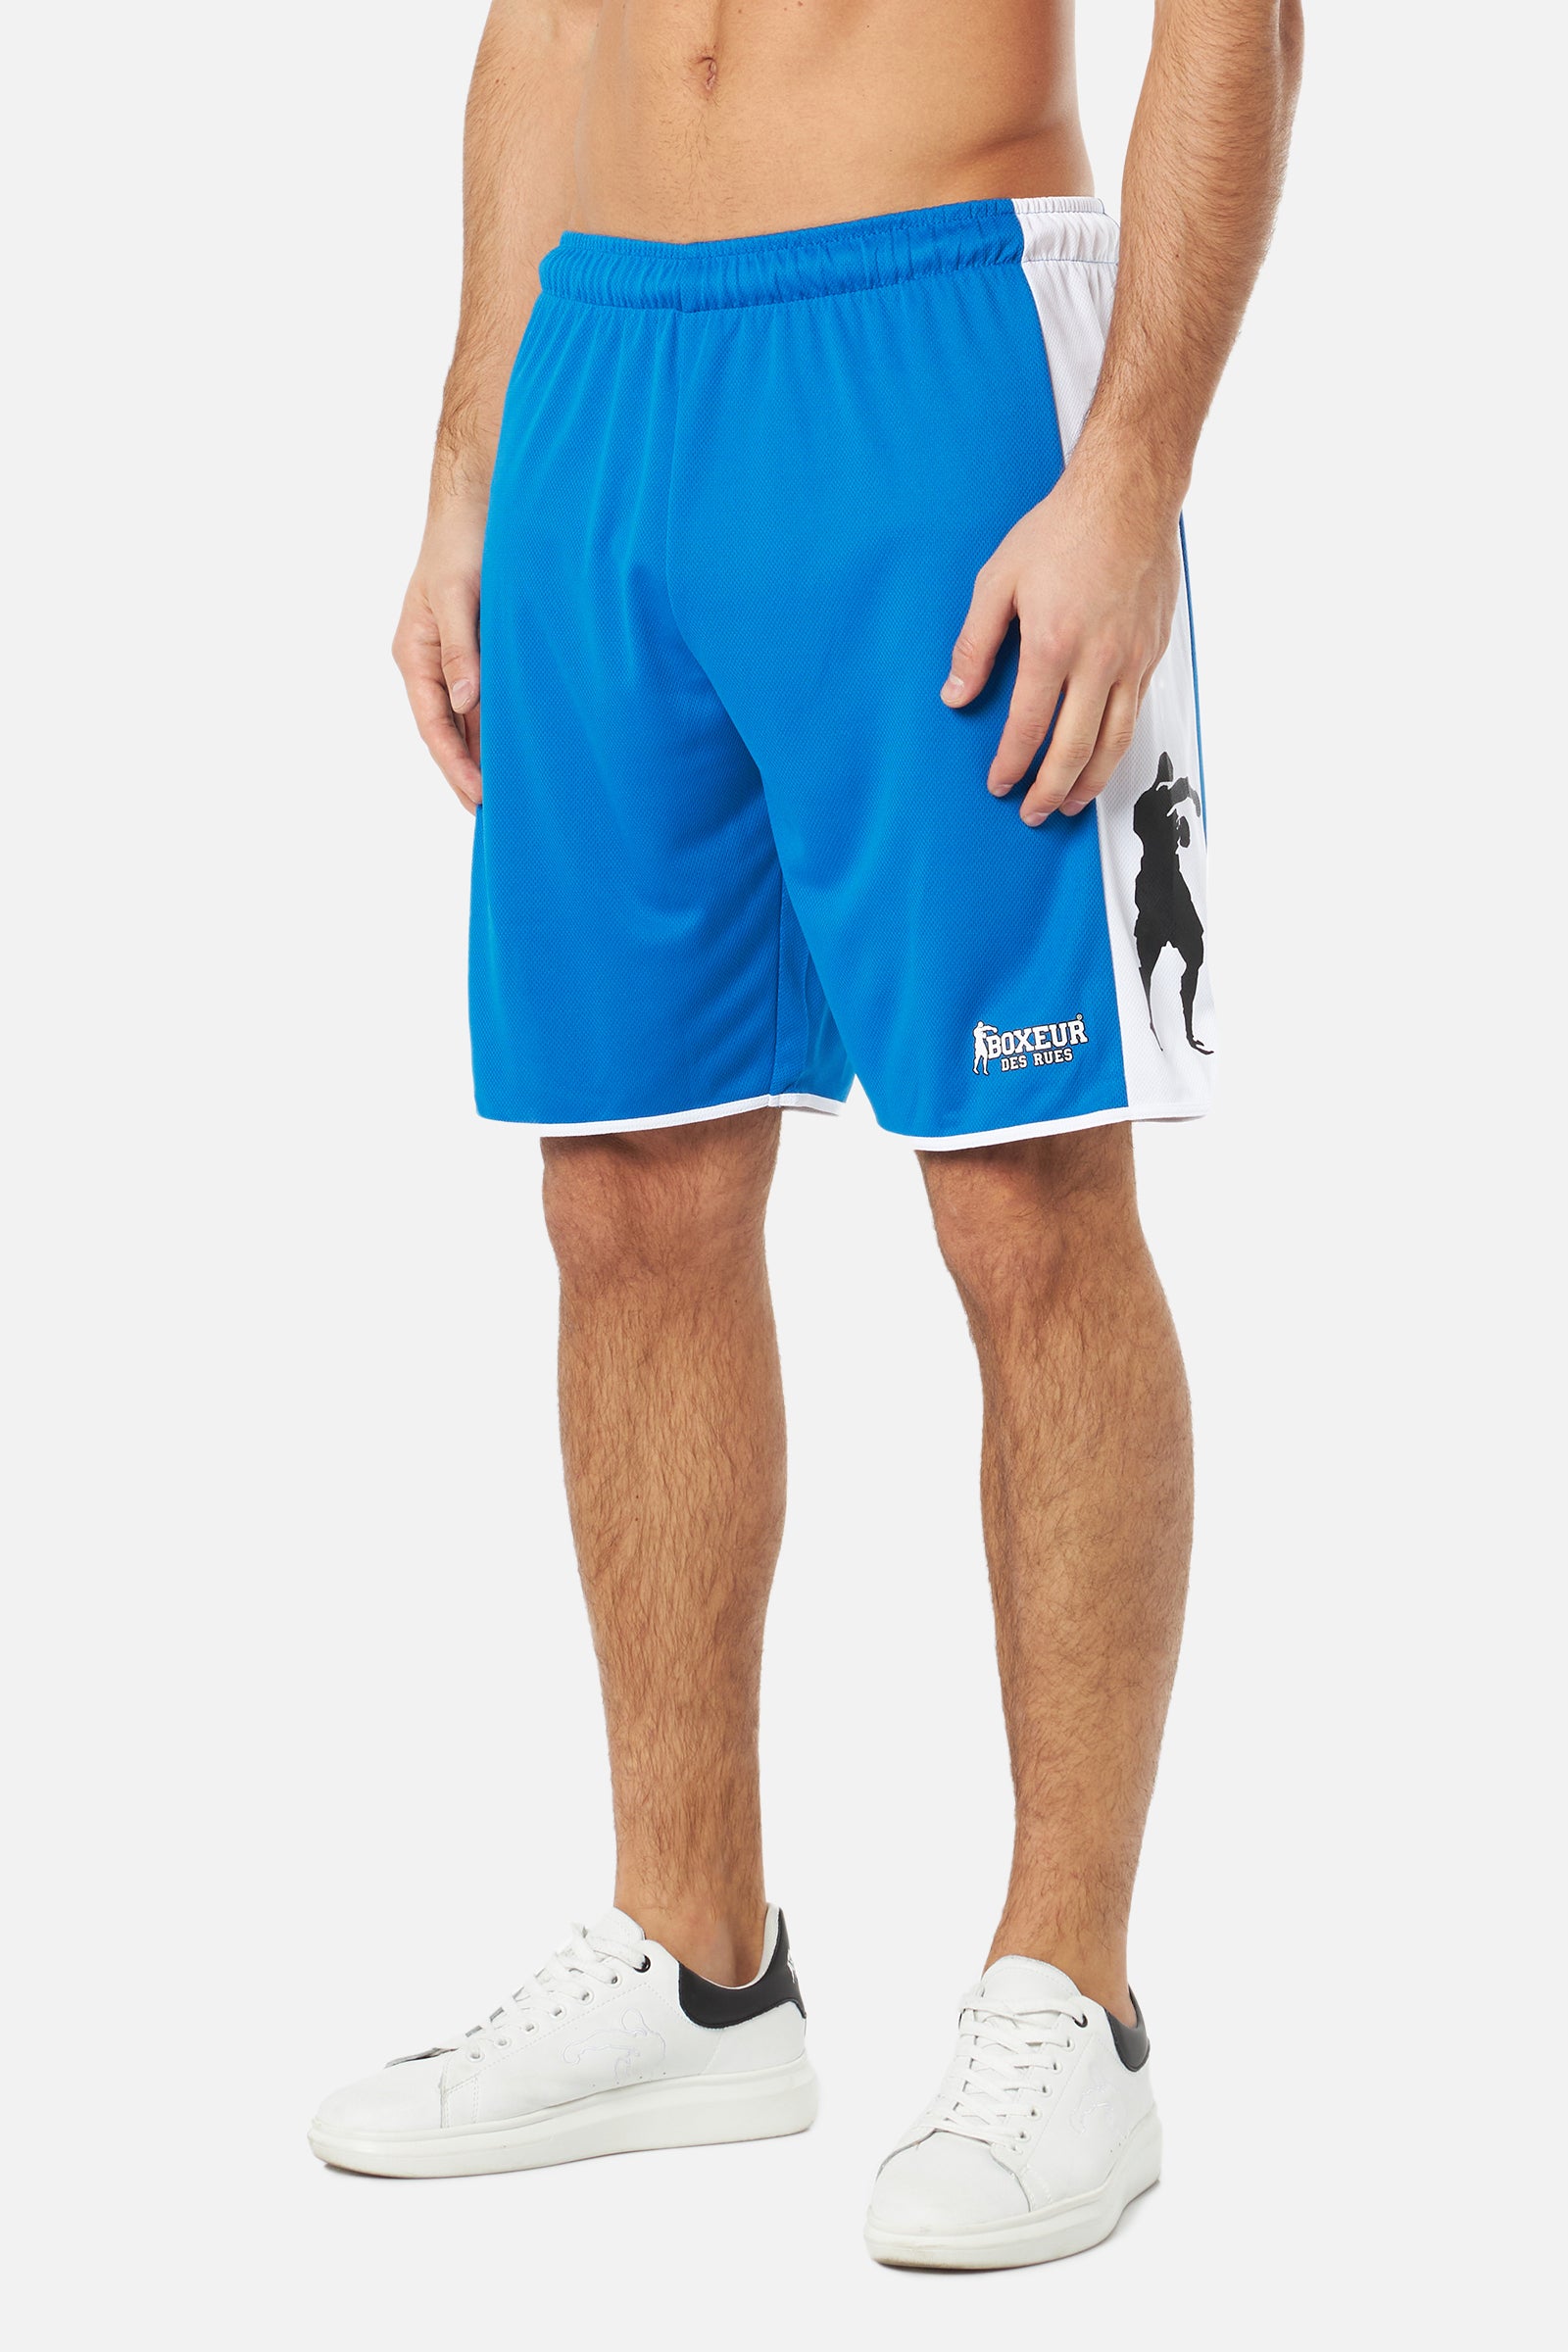 Soccer Basic Shorts in Azure Shorts Boxeur des Rues   